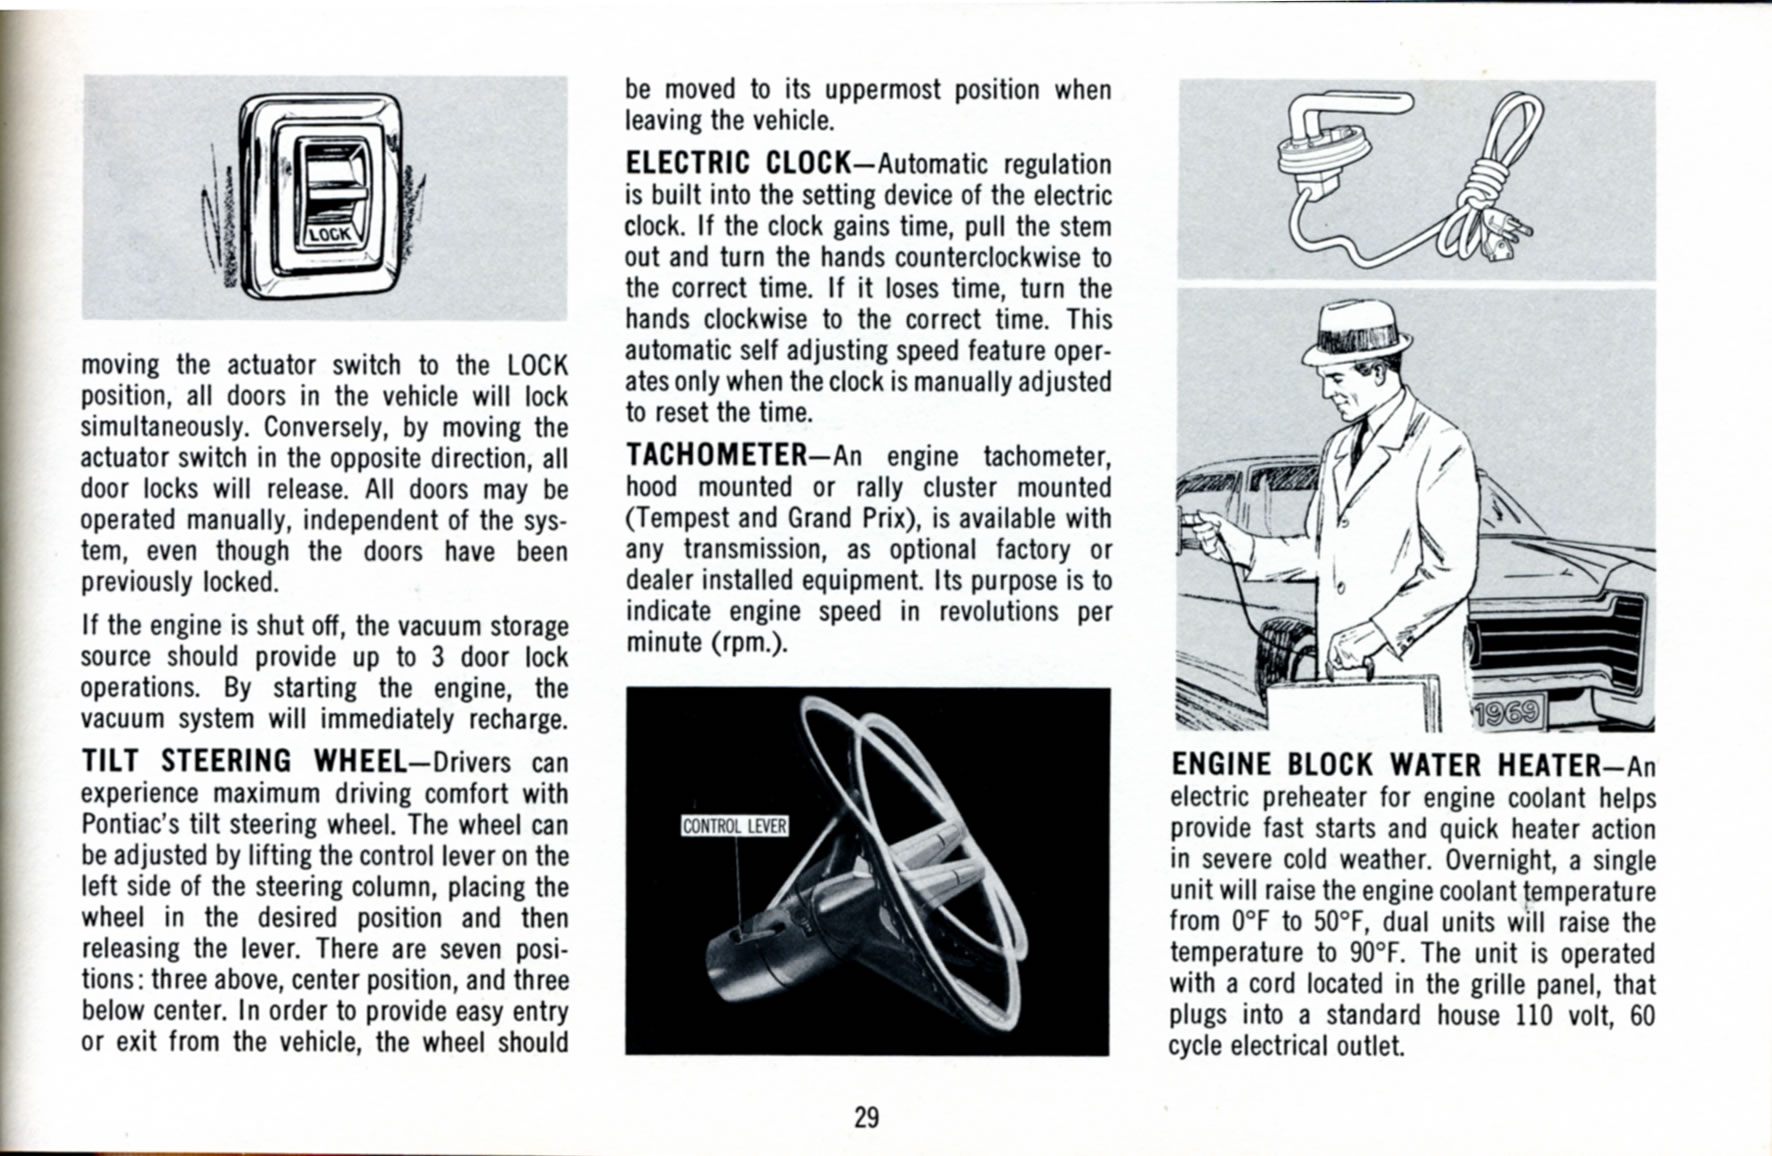 1969_Pontiac_Owners_Manual-29